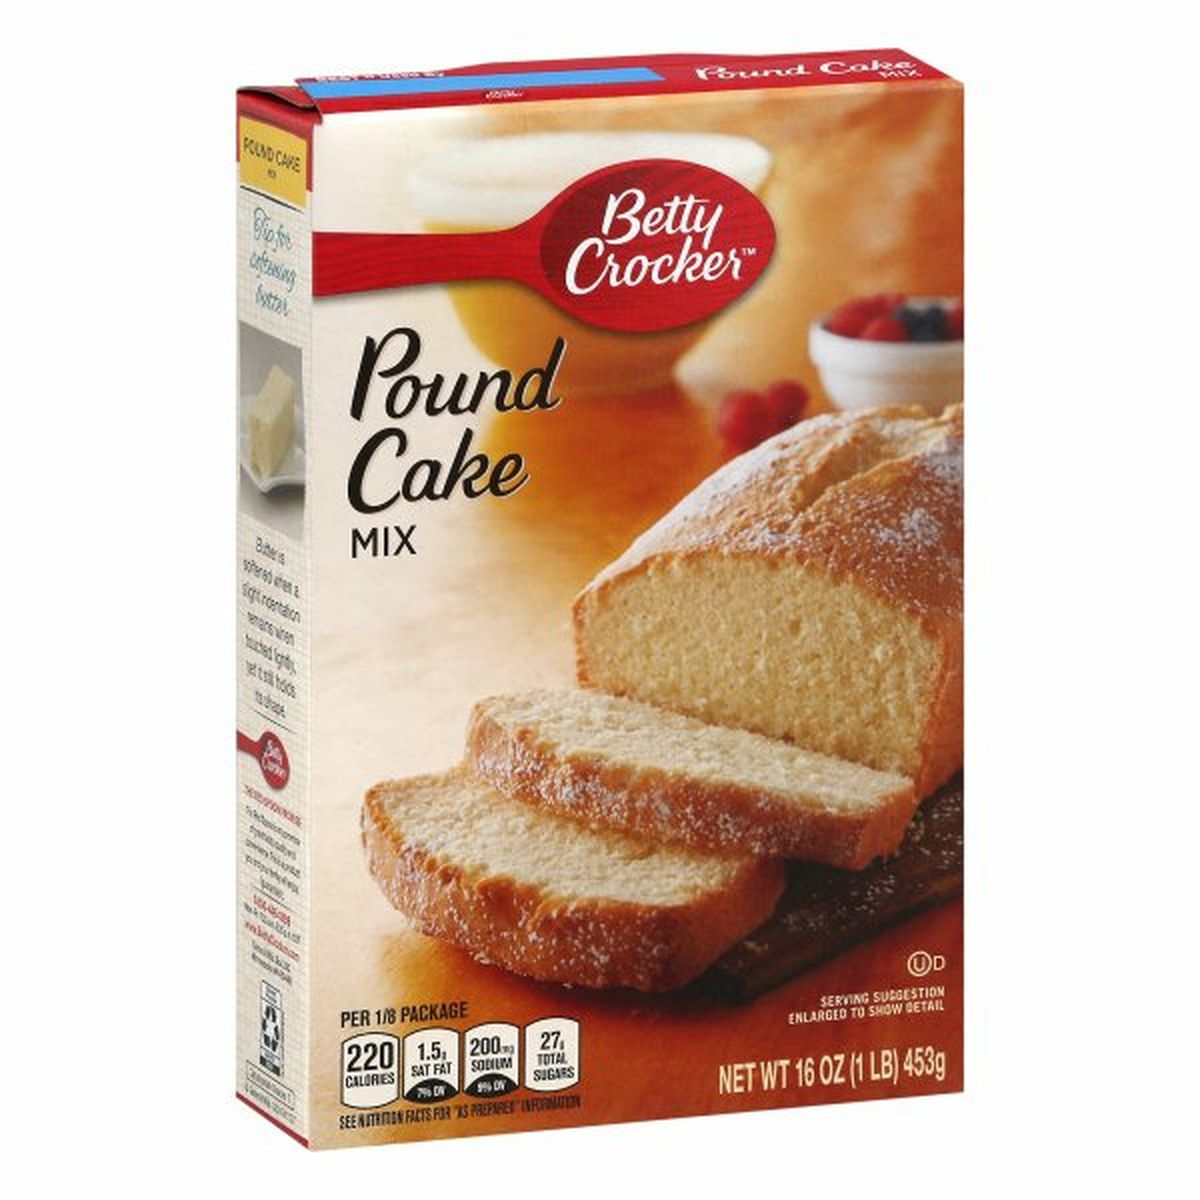 Calories in Betty Crocker Pound Cake Mix